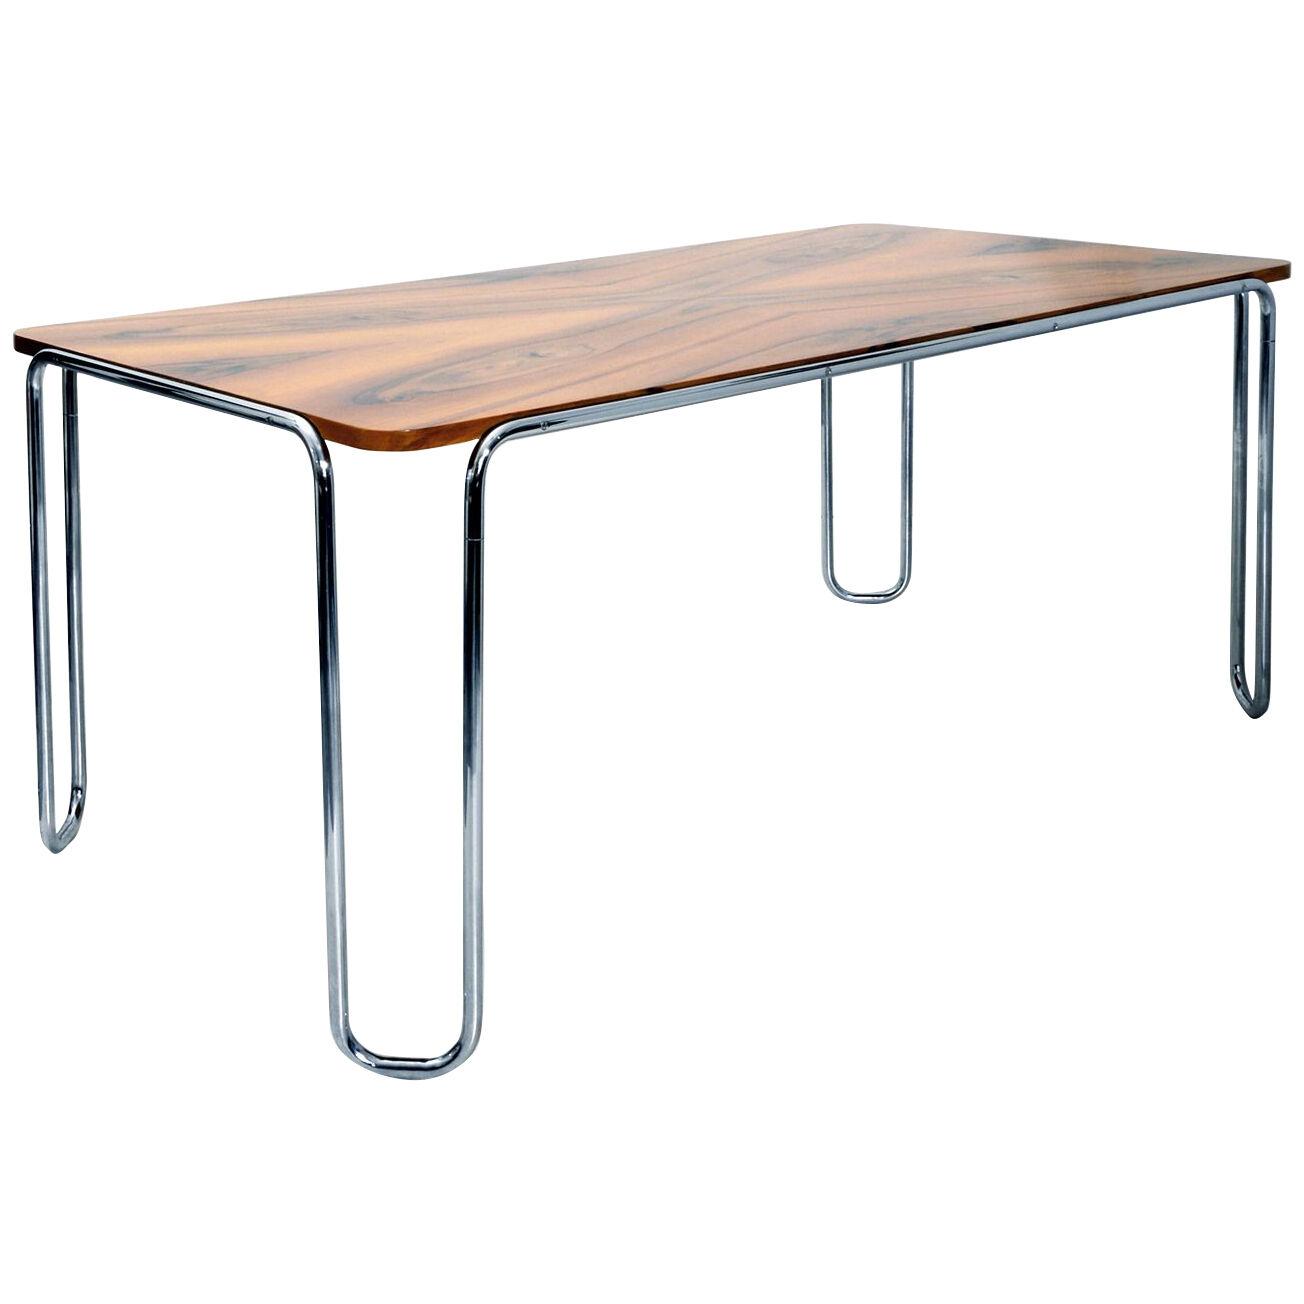 Modernist customizable tubular steel table by GMD Berlin